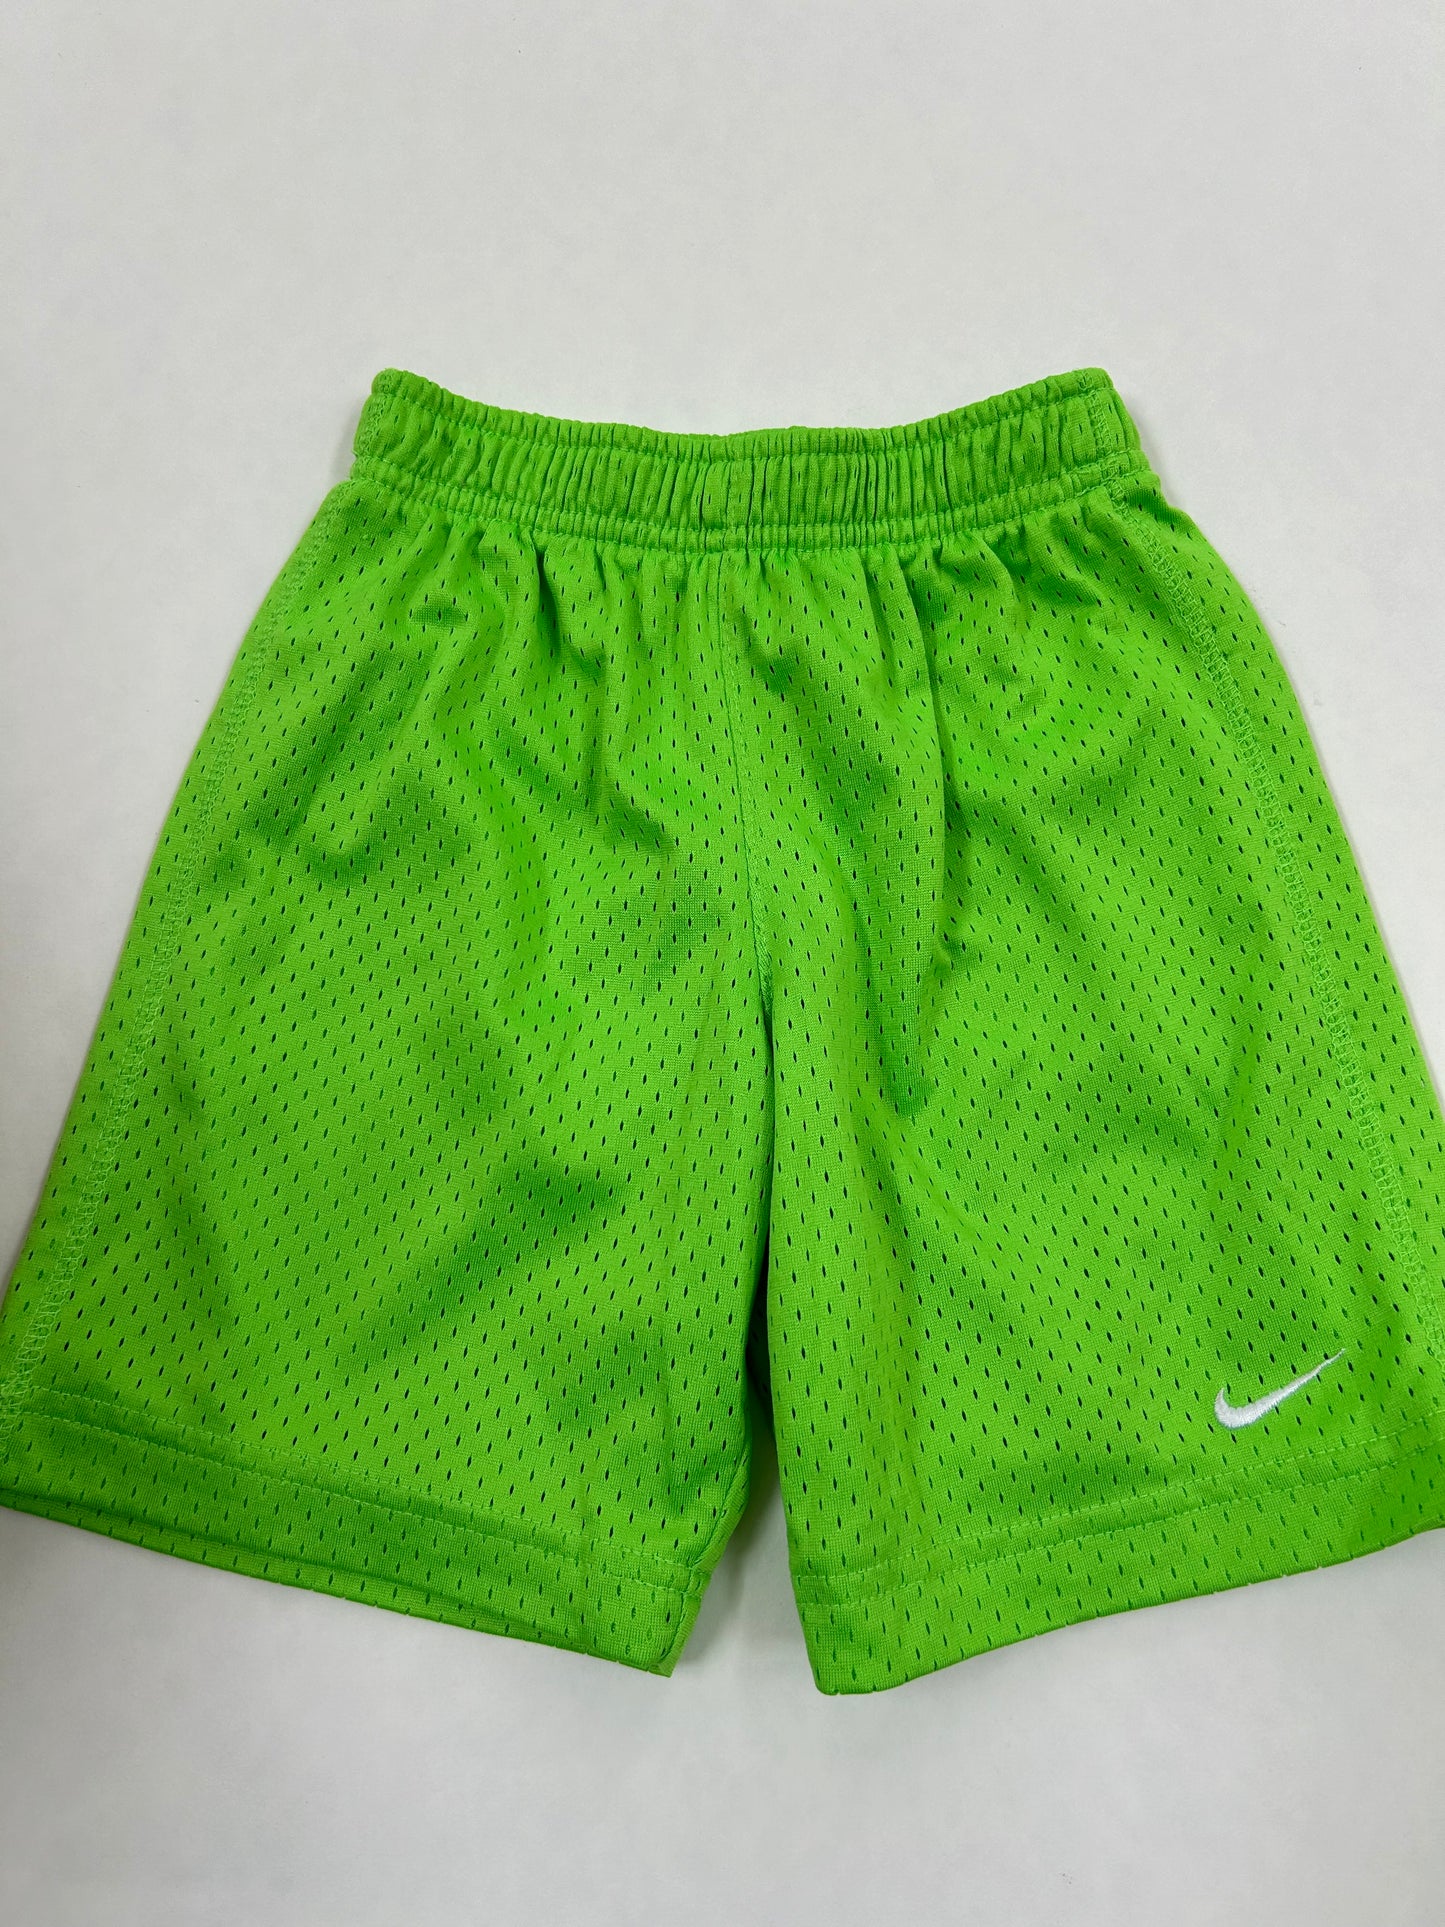 Boys 4T Nike Neon green mesh shorts